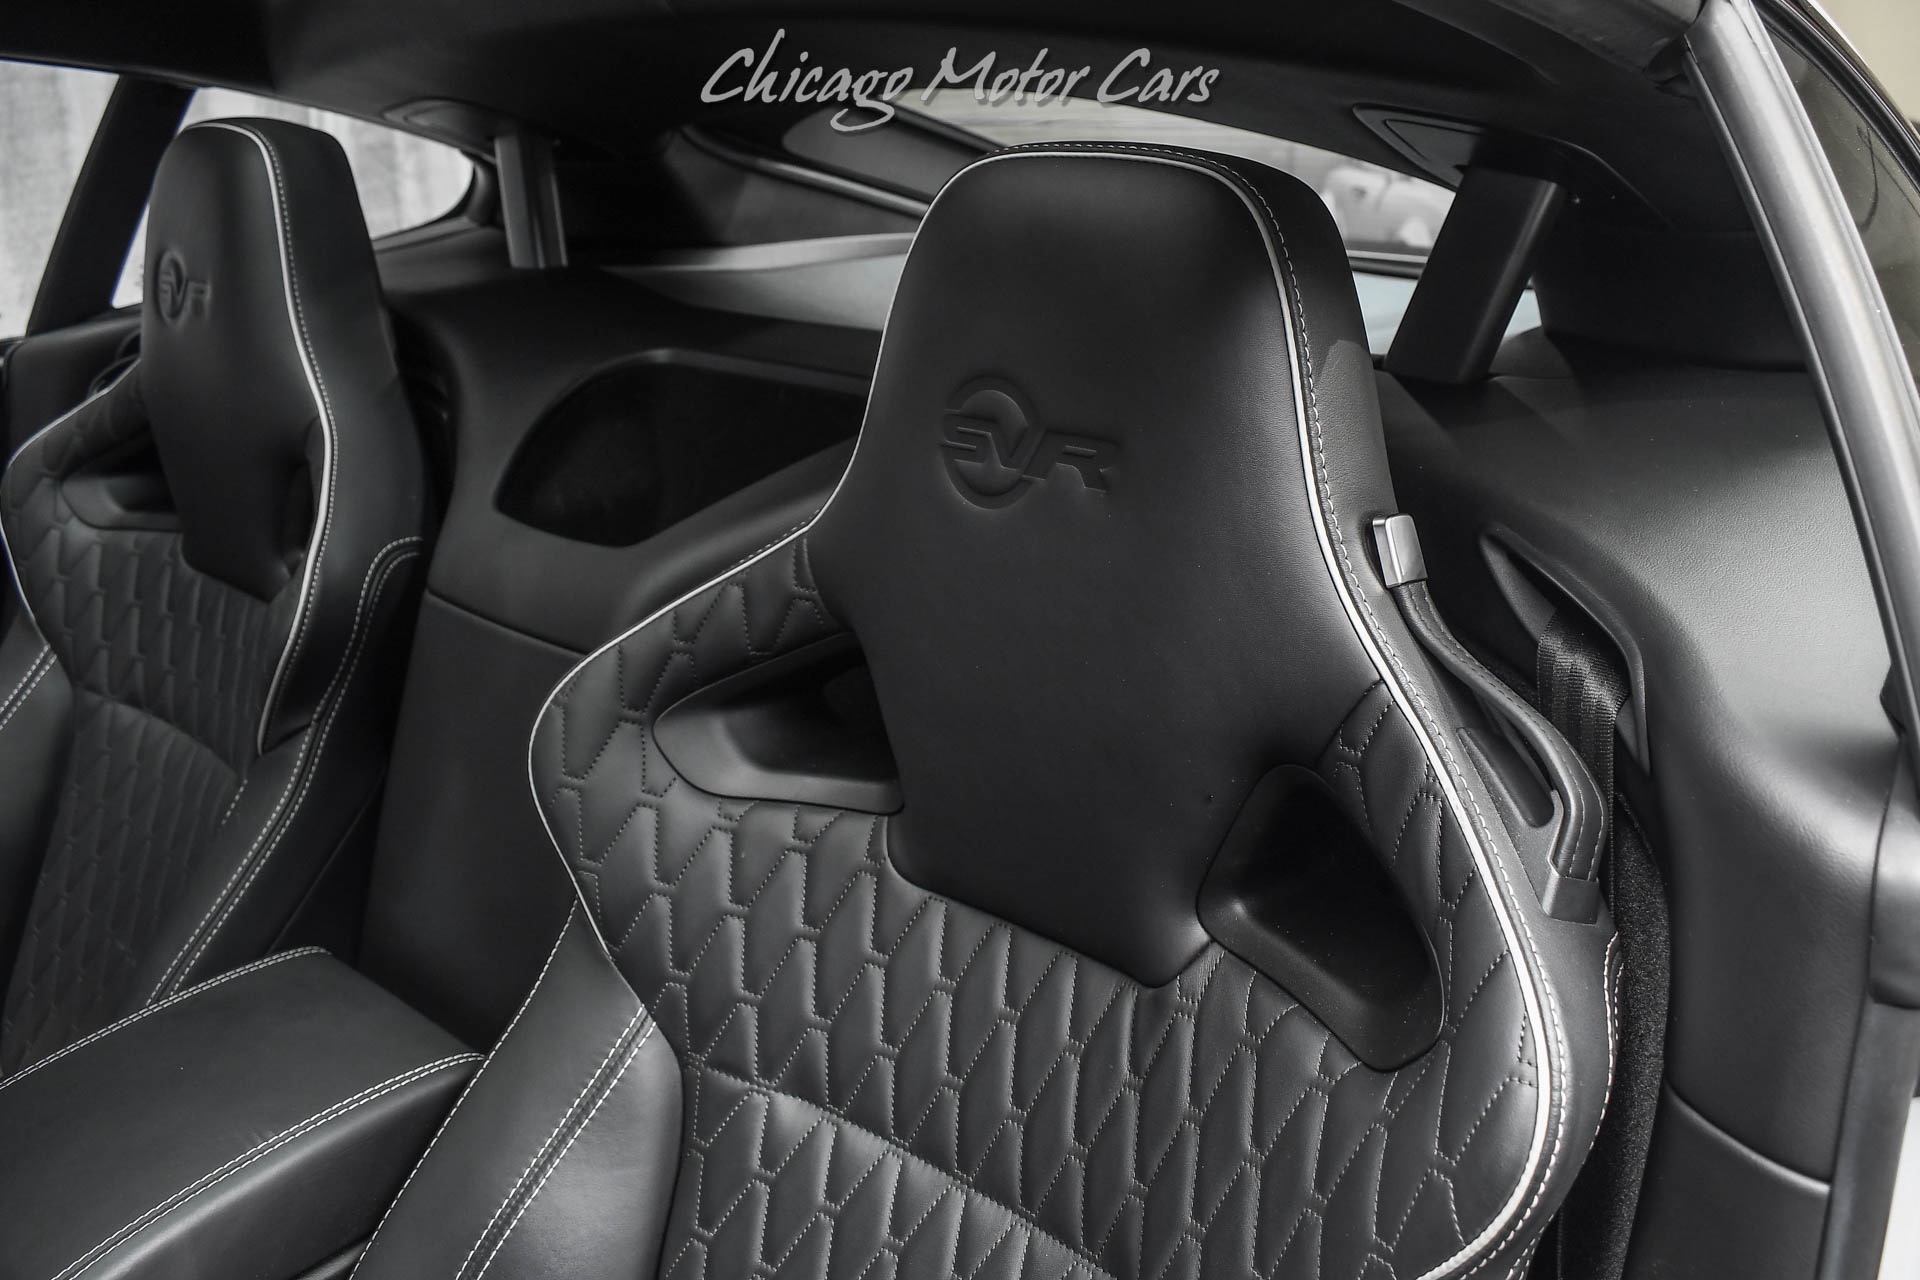 Used-2017-Jaguar-F-TYPE-SVR-AWD-Coupe-Extended-Leather-Pkg-Carbon-Trim-Supercharged-V8